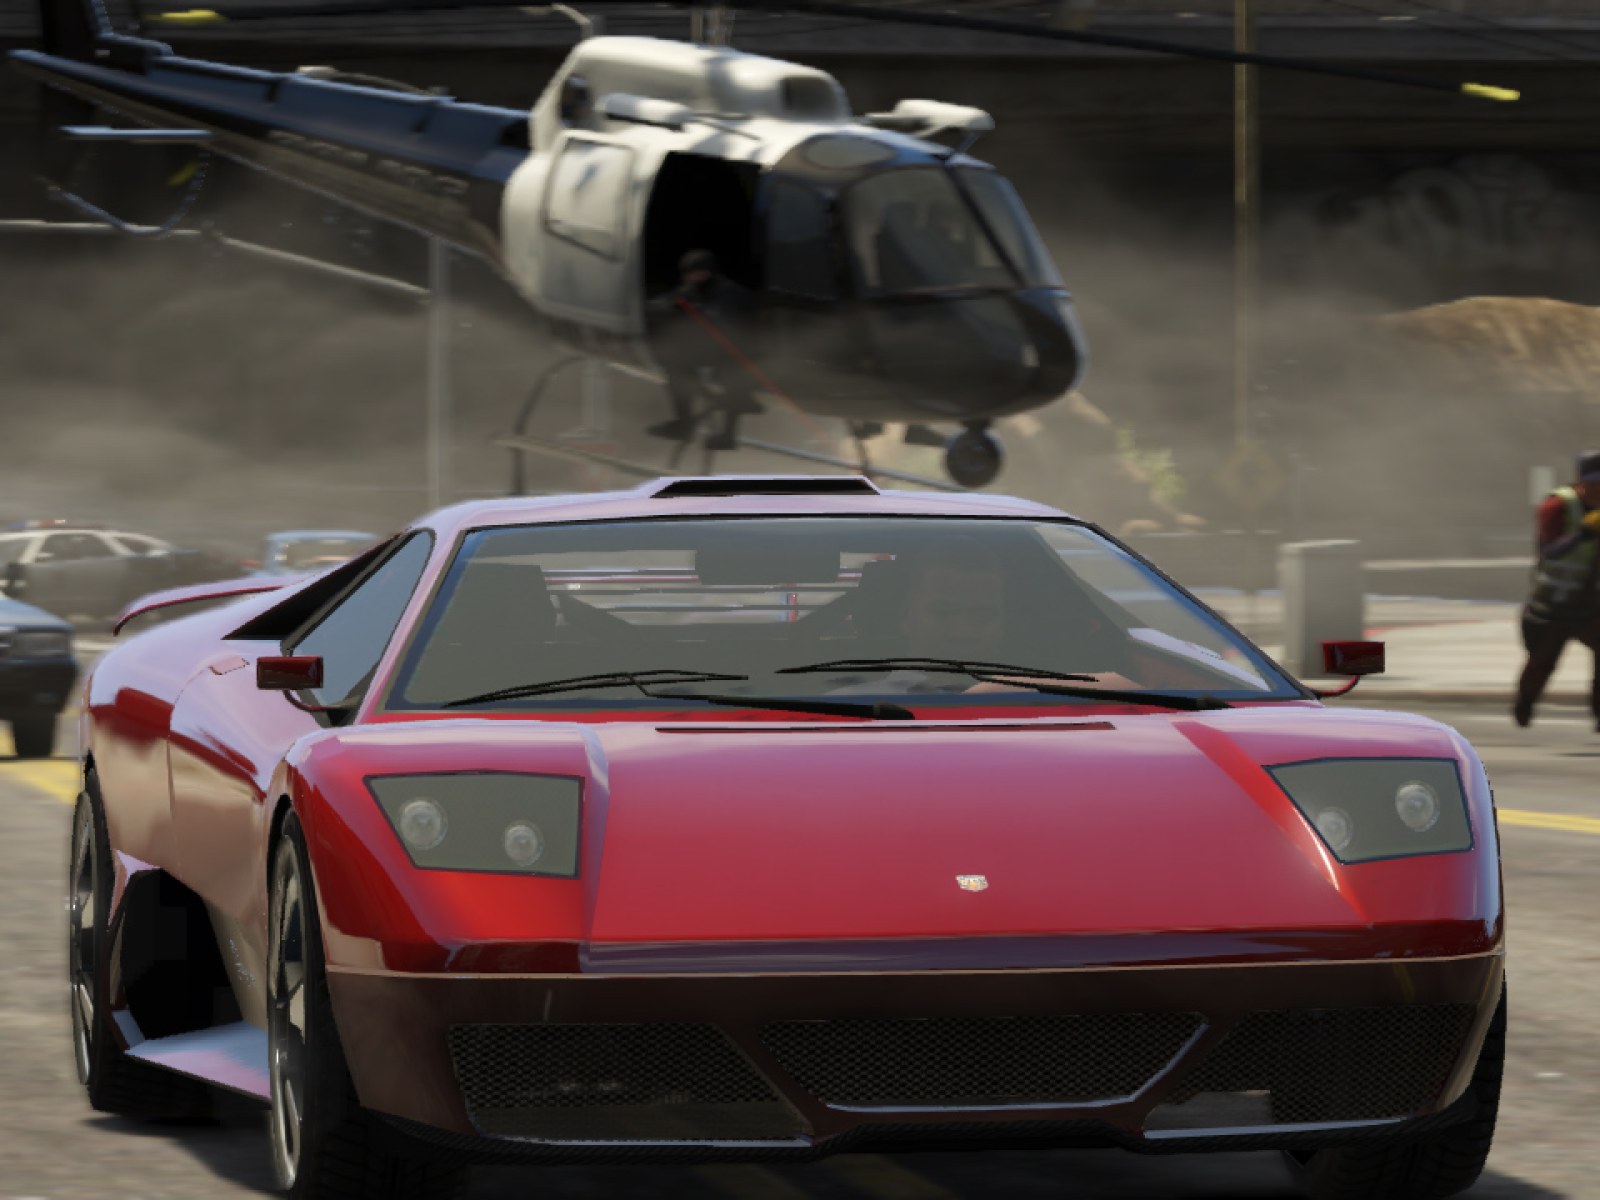 GTA 6: Release Date, Launch Trailer & Guide